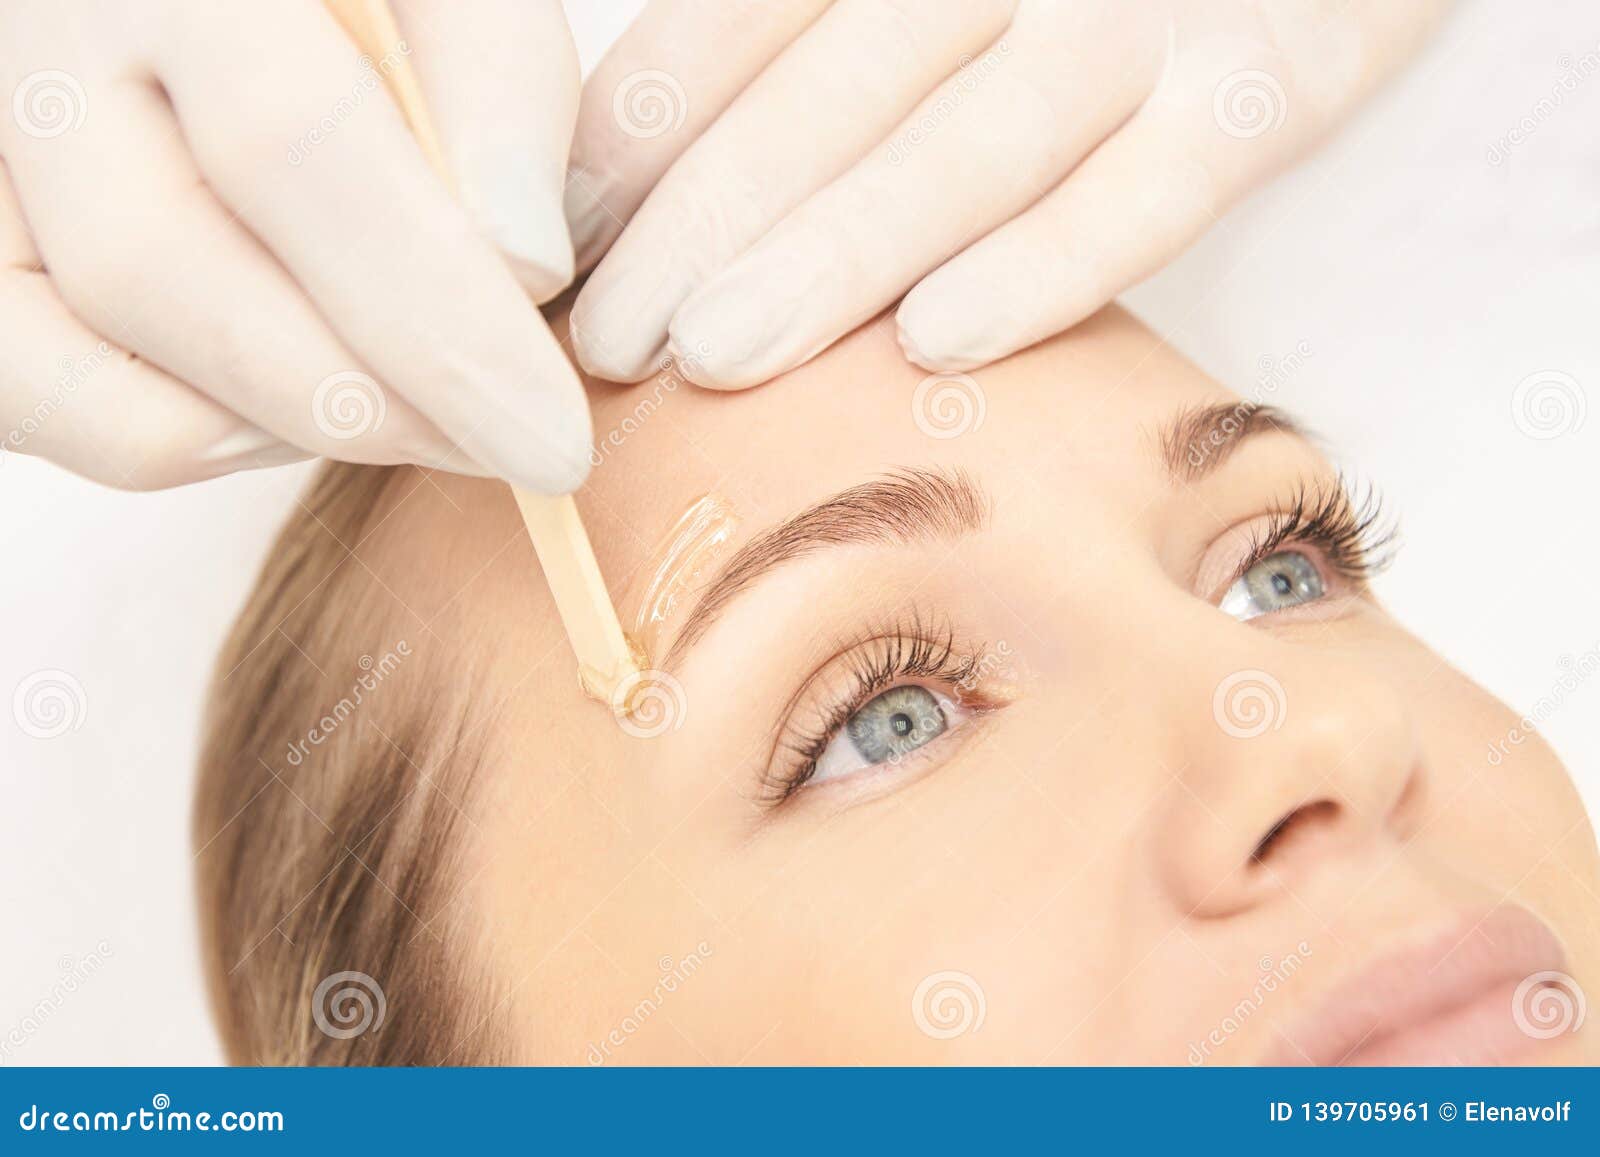 sugar hair removal woman body wax epilation spa procedure procedure beautician female eyebrow sugar hair removal woman 139705961